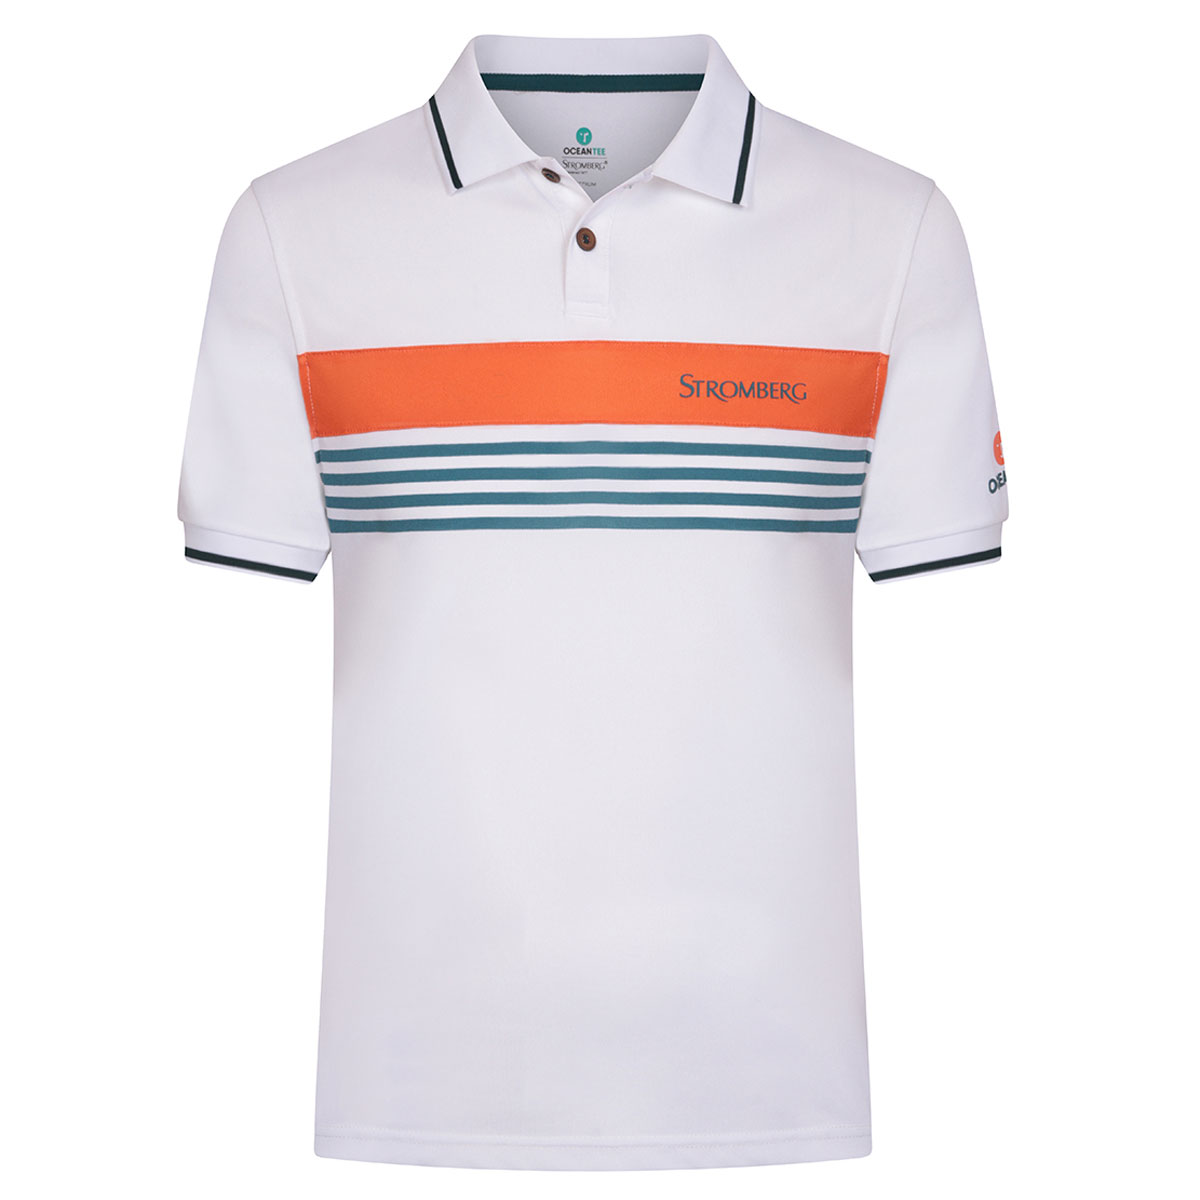 Stromberg Ocean Tee multi-coloured polo shirt